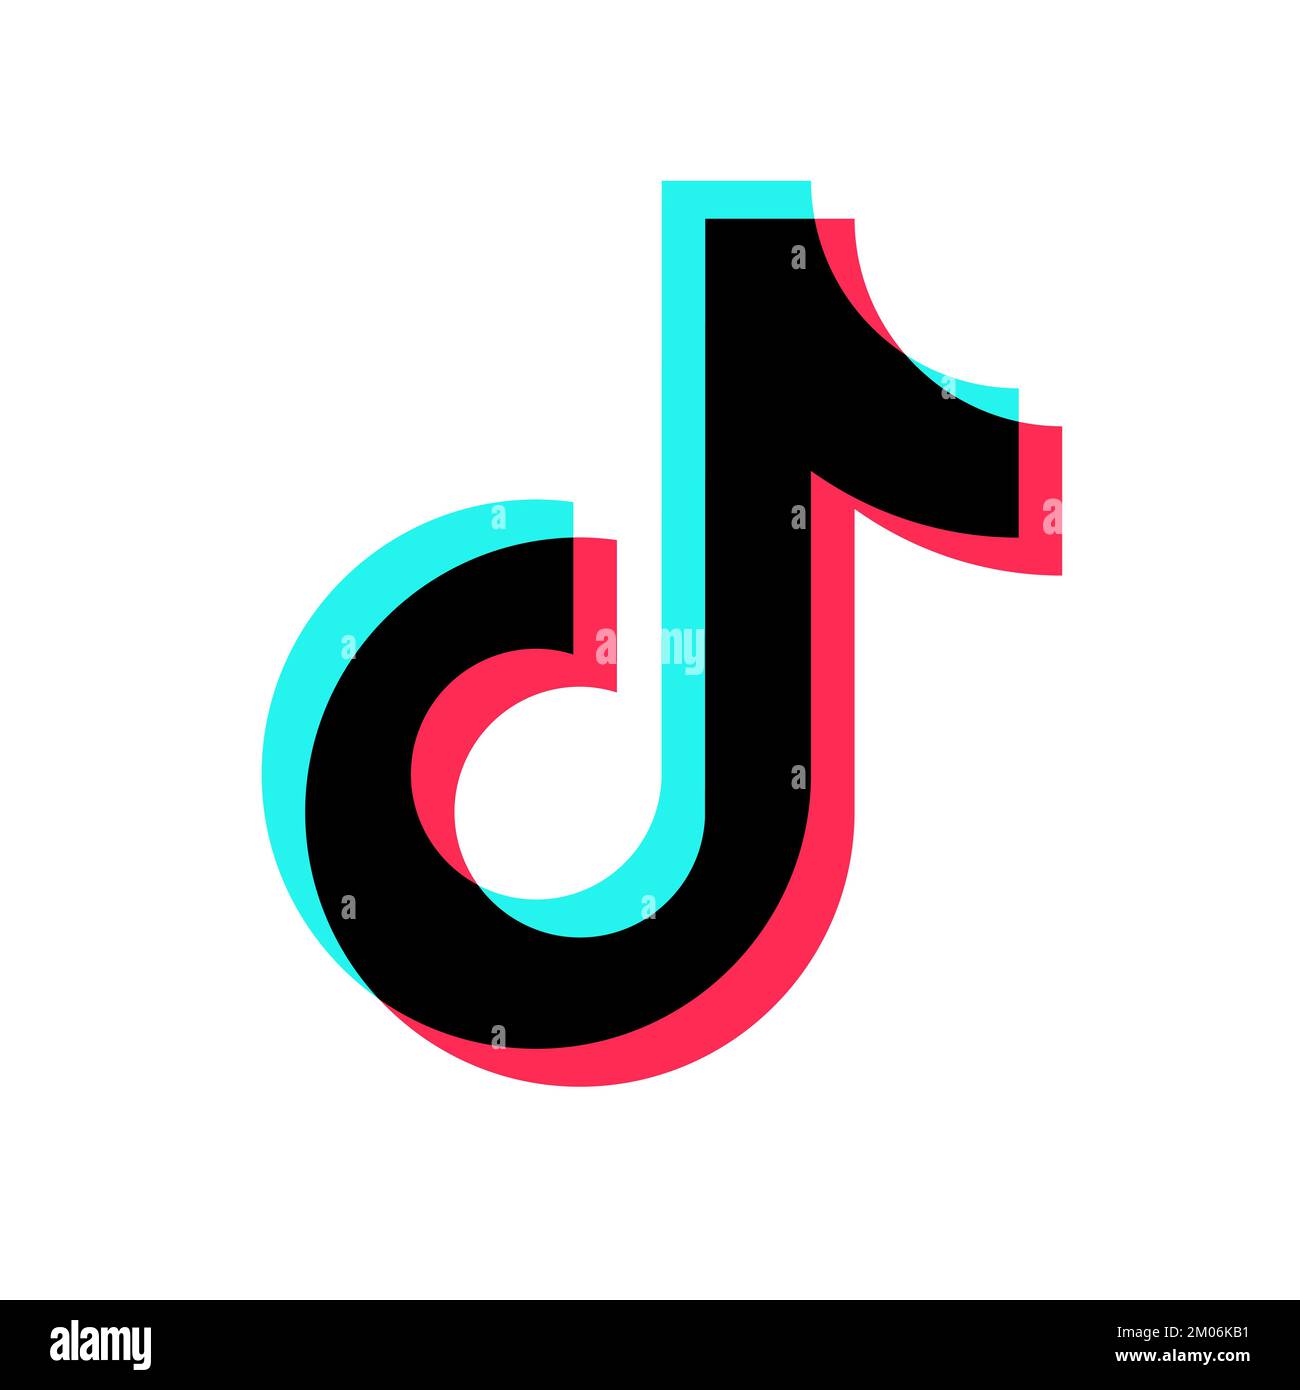 TikTok social media app icon. Square shape vector illustration